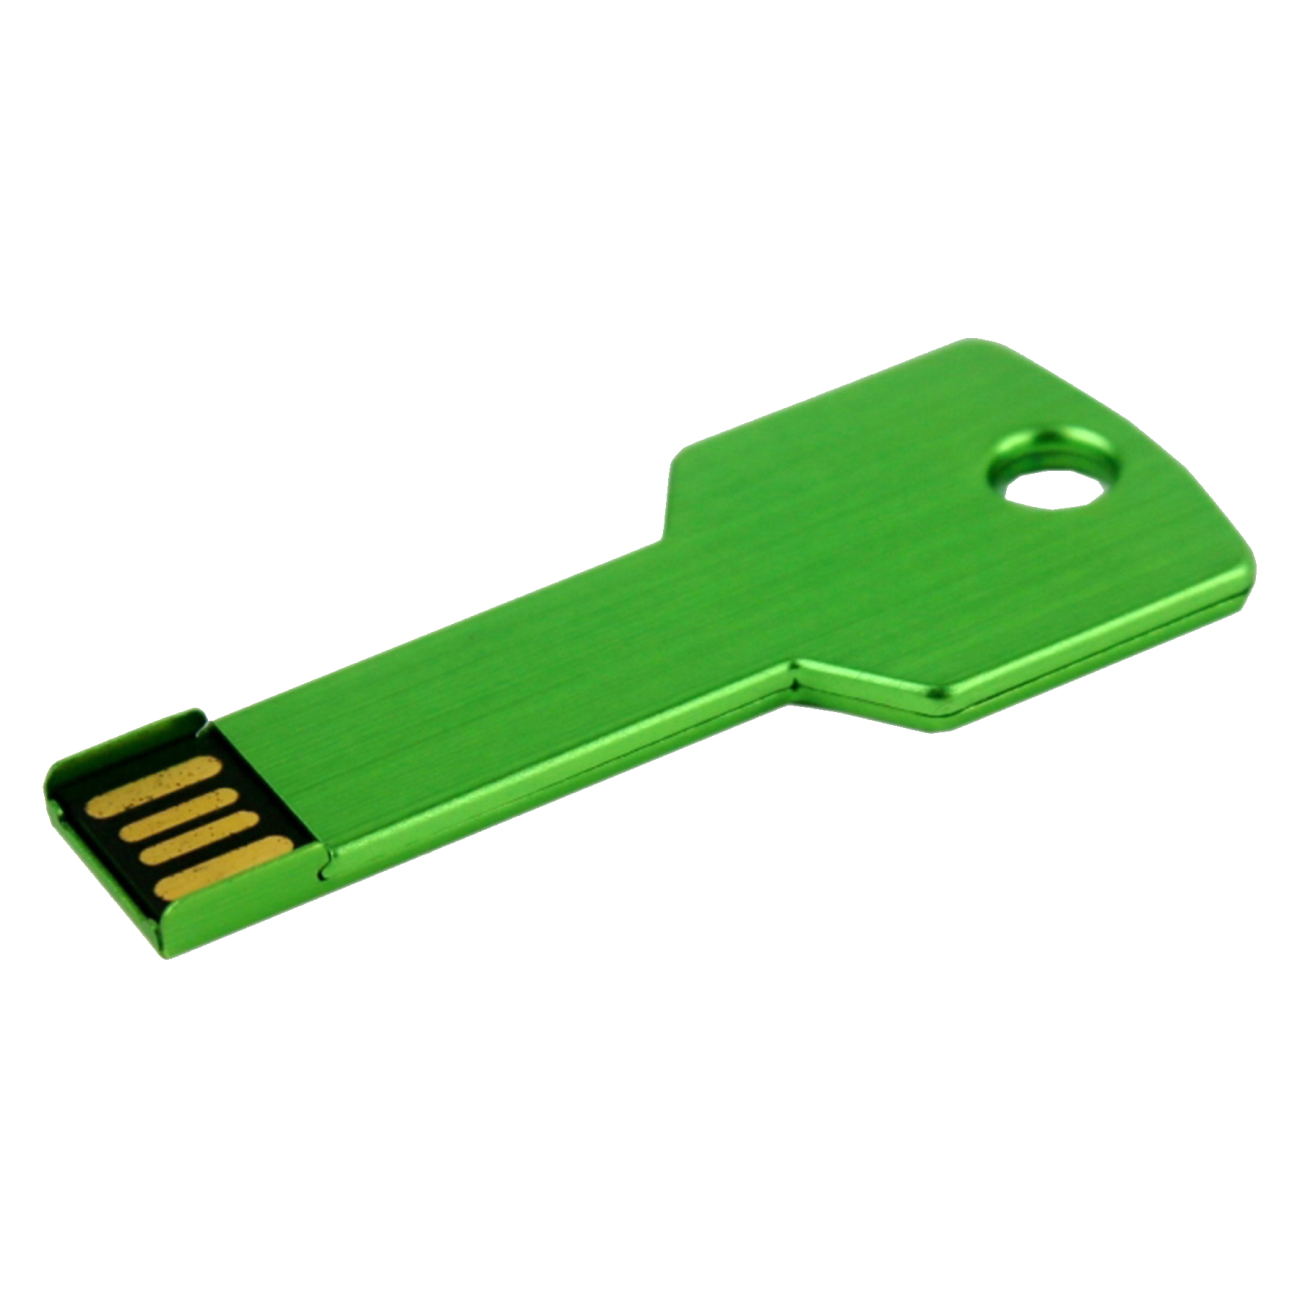 USB GERMANY Key Grün16GB USB-Stick GB) (Grün, 16